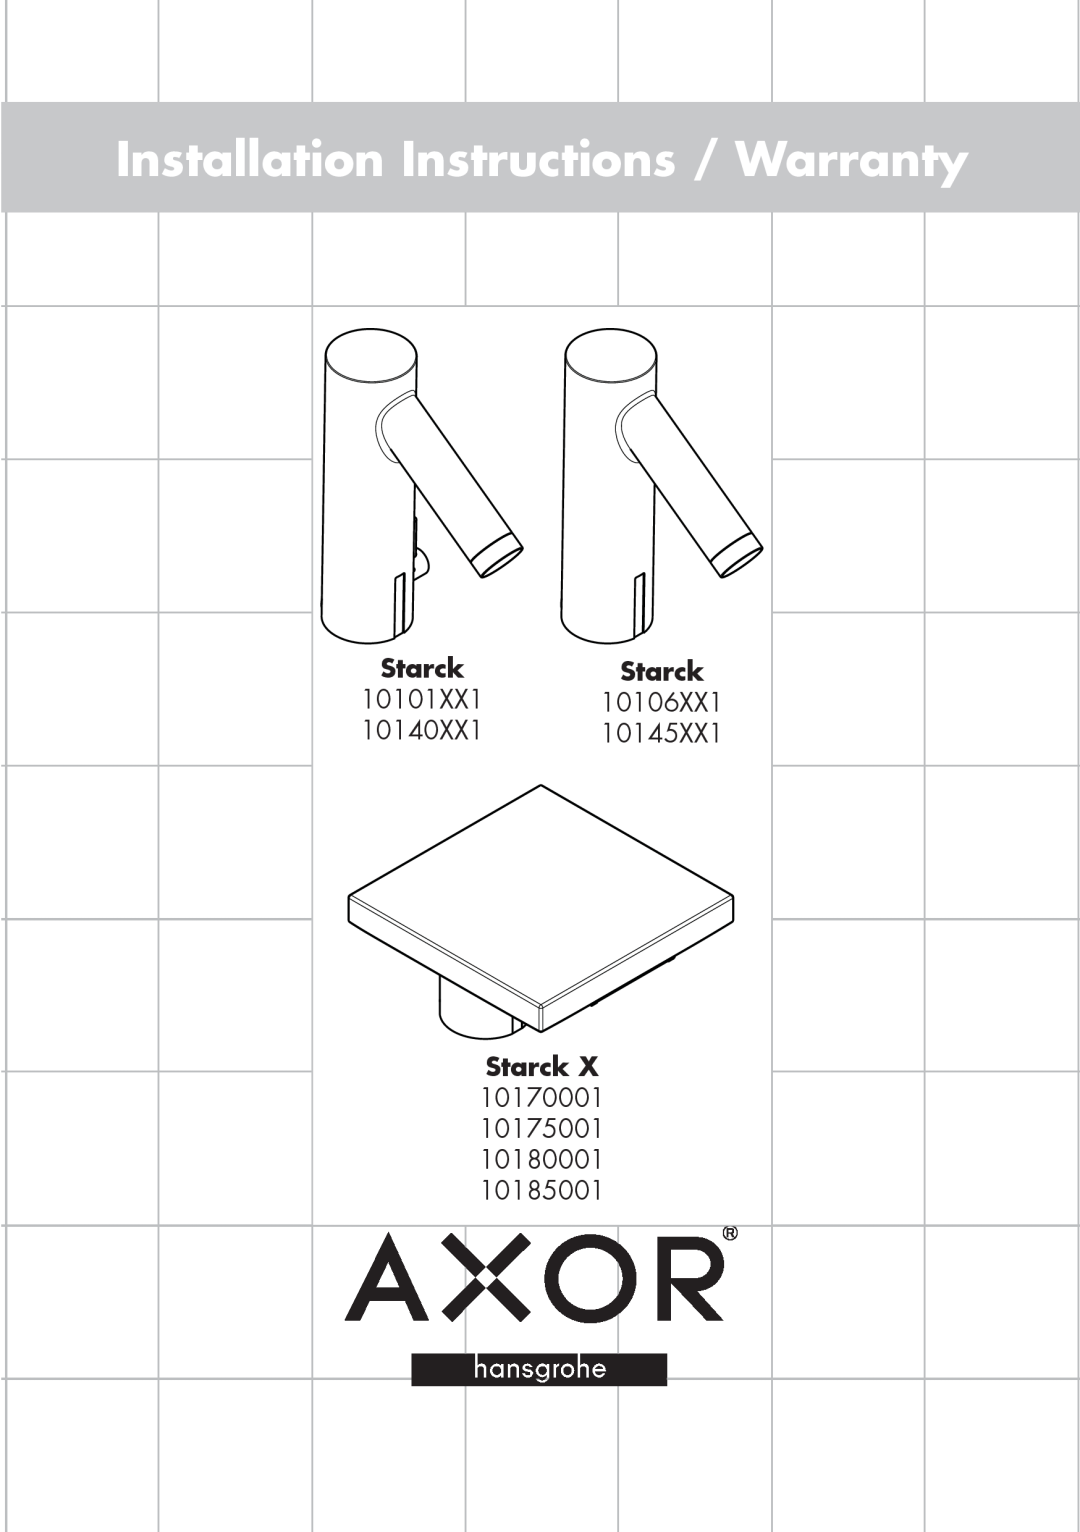 Axor 10175001 installation instructions Starck, 10101XX1, 10106XX1, 10140XX1, 10145XX1, 10170001, 10180001, 10185001 